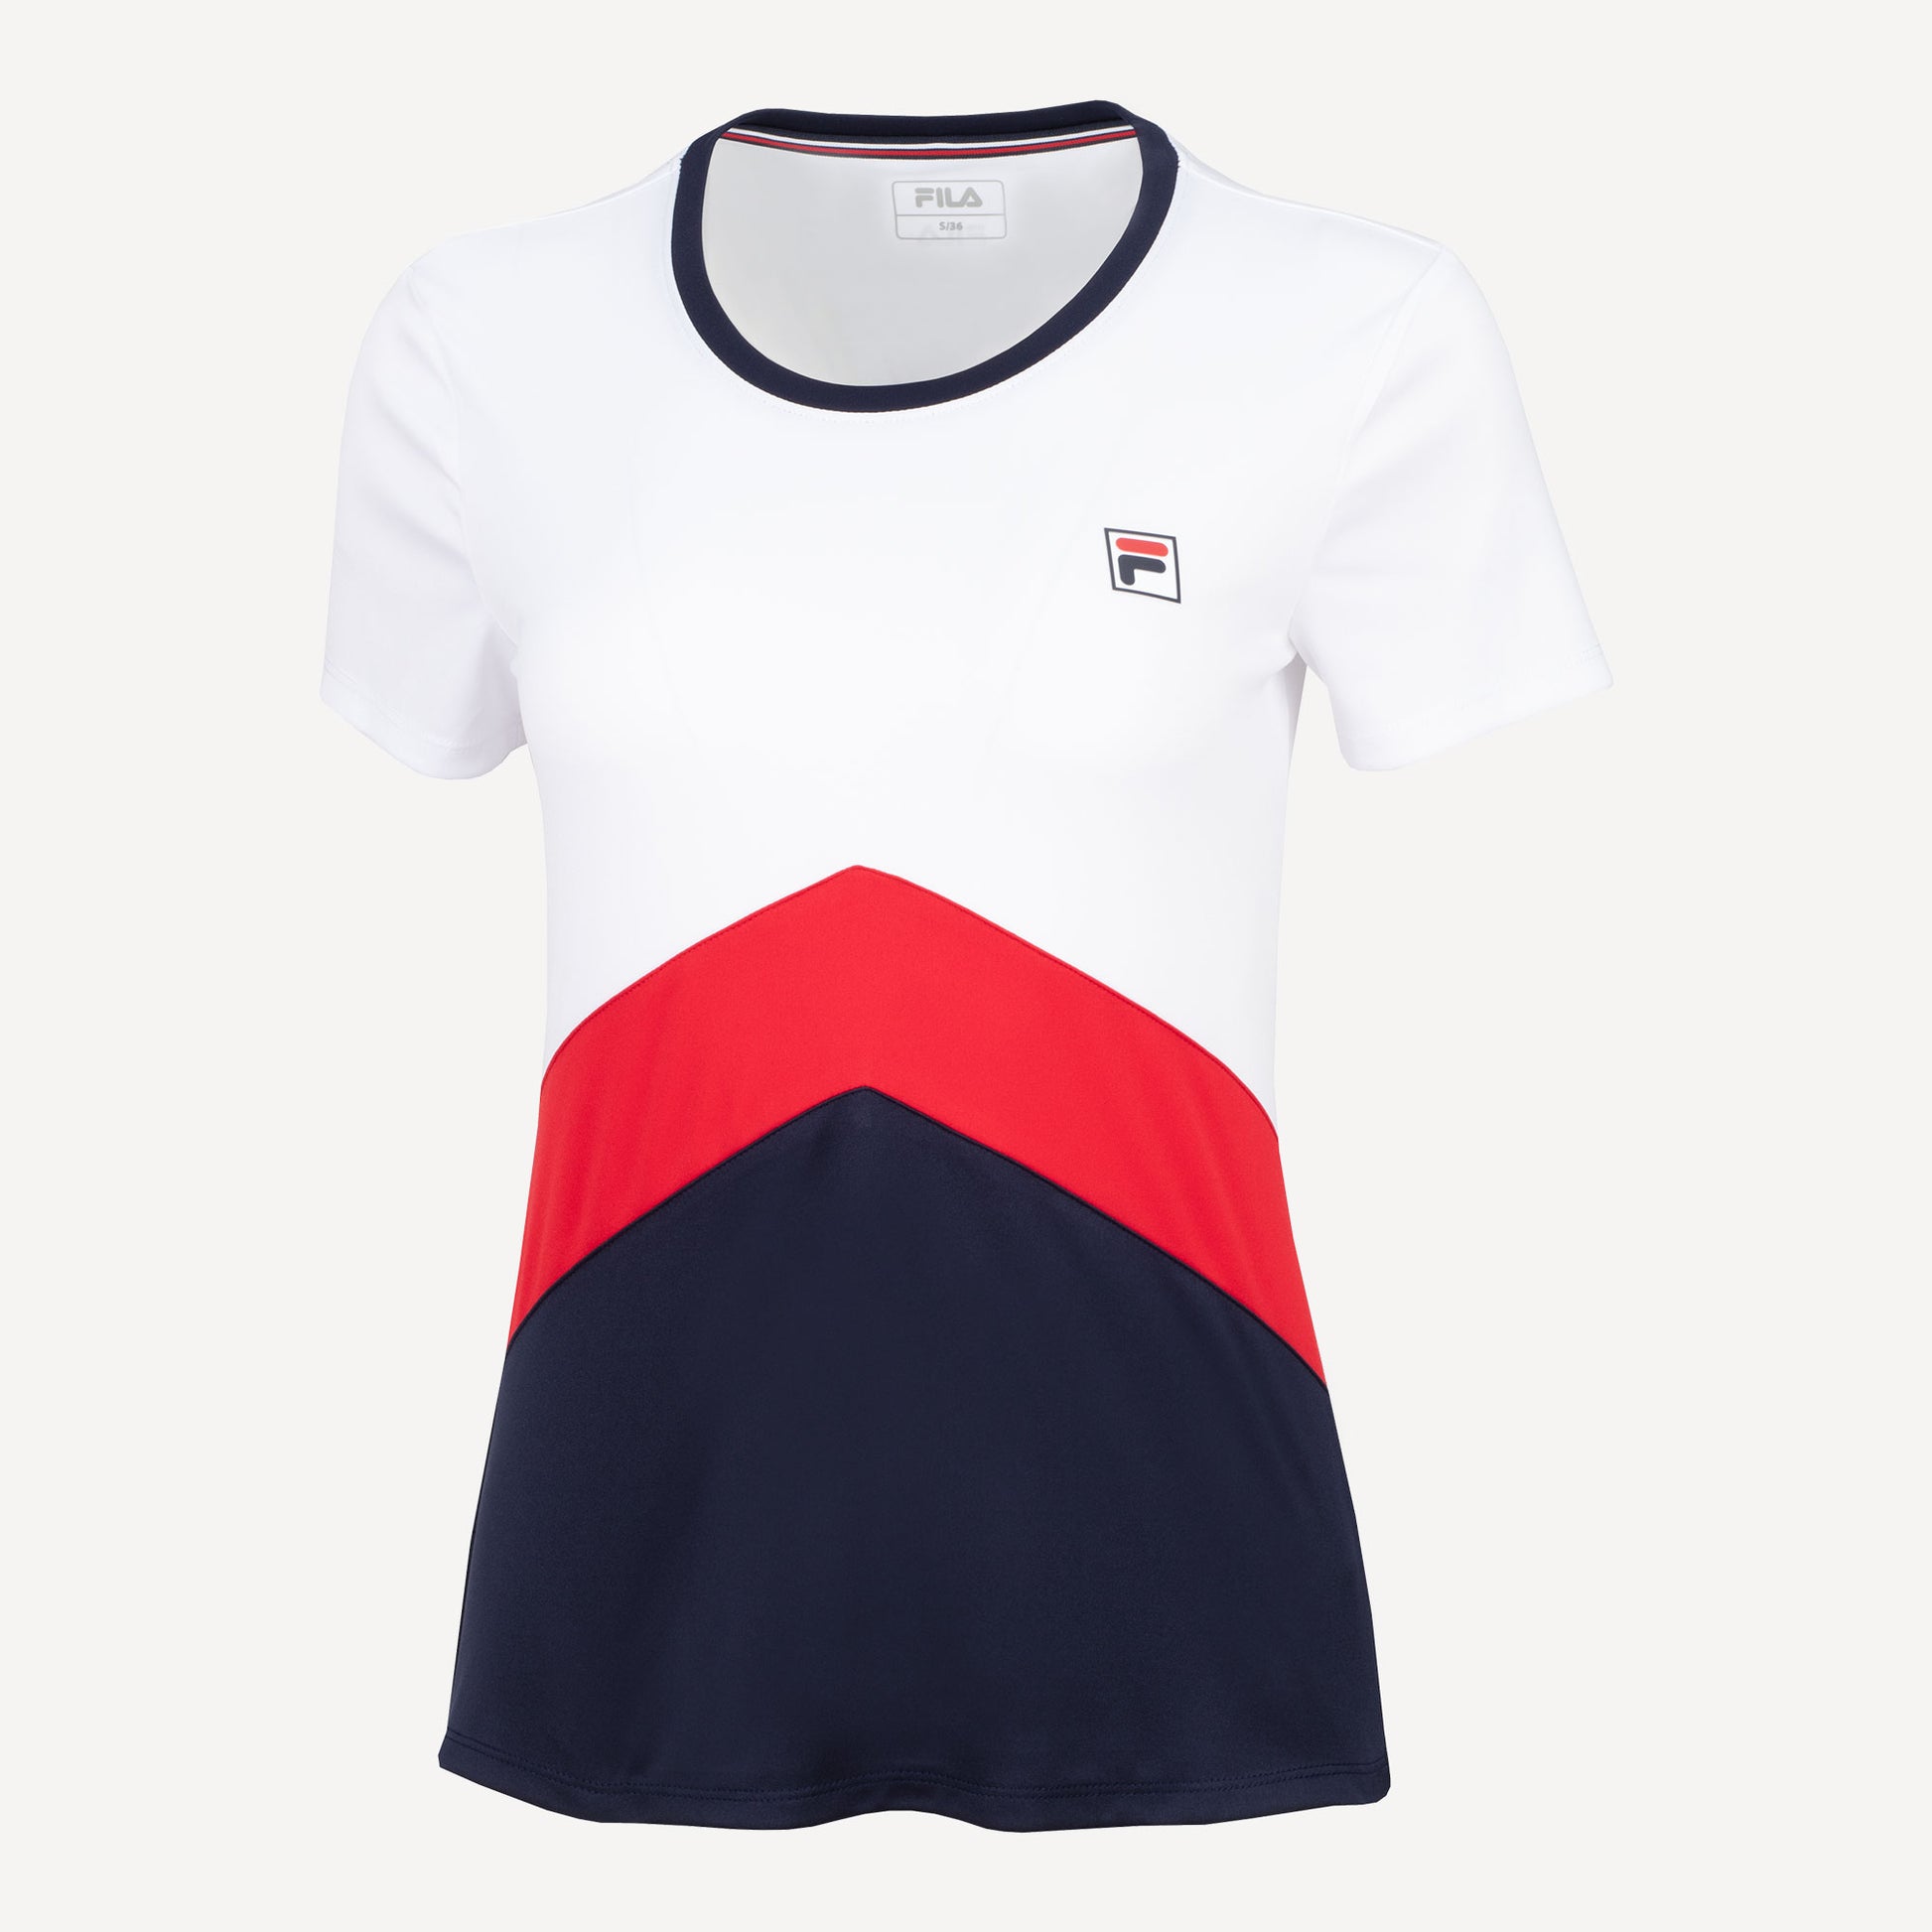 Fila Aurelia Women's Tennis Shirt White (1)